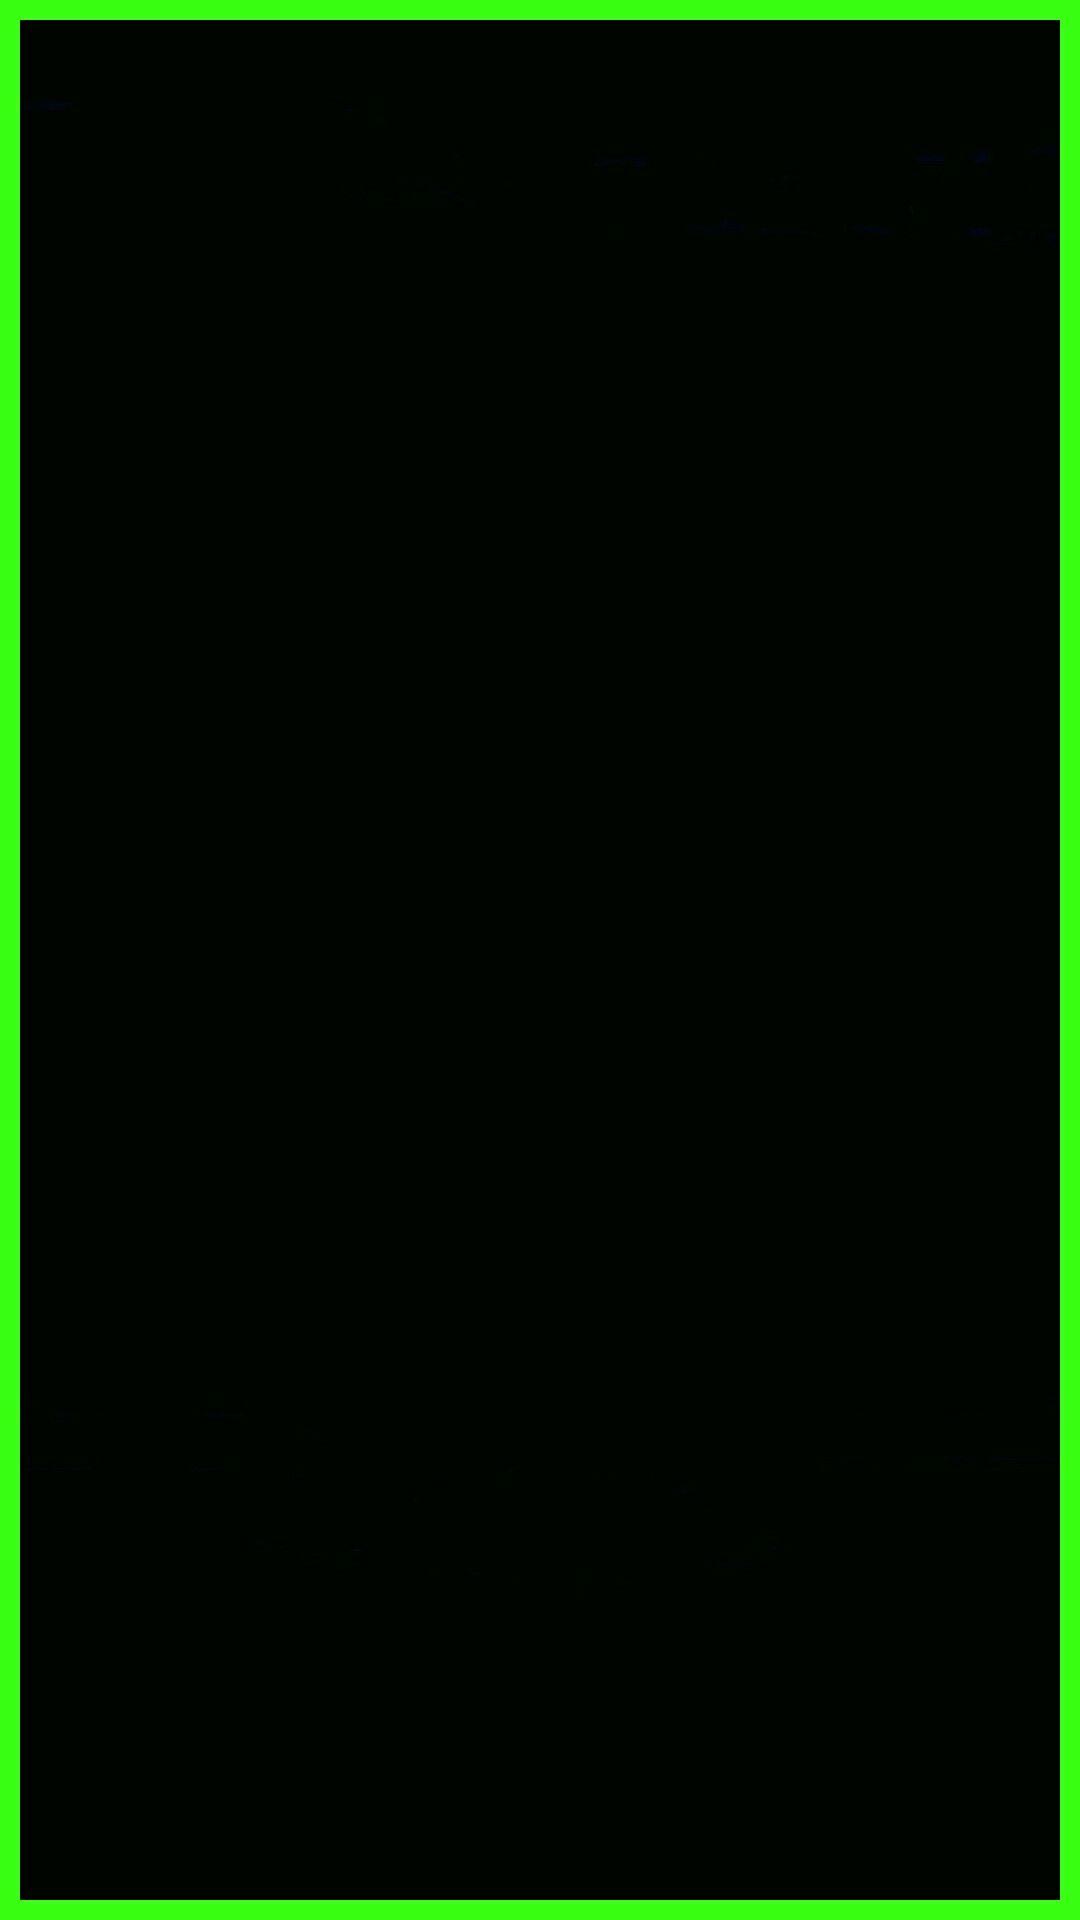 Neon Green Border Wallpaper. *Black Wallpaper